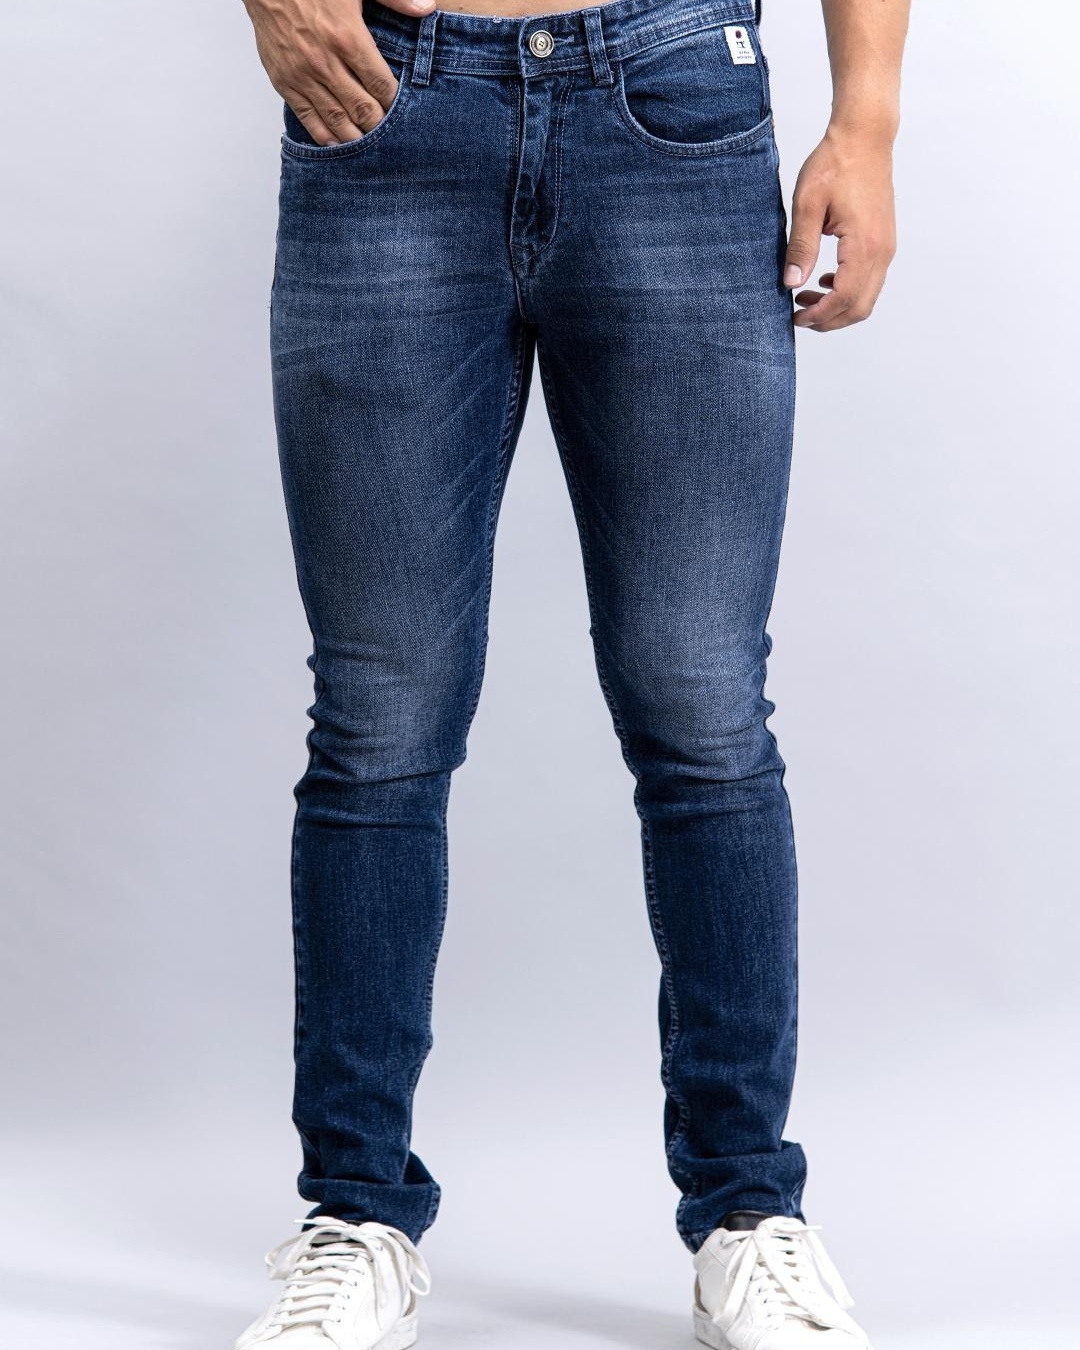 Buy Men's Blue Washed Jeans Online at Bewakoof